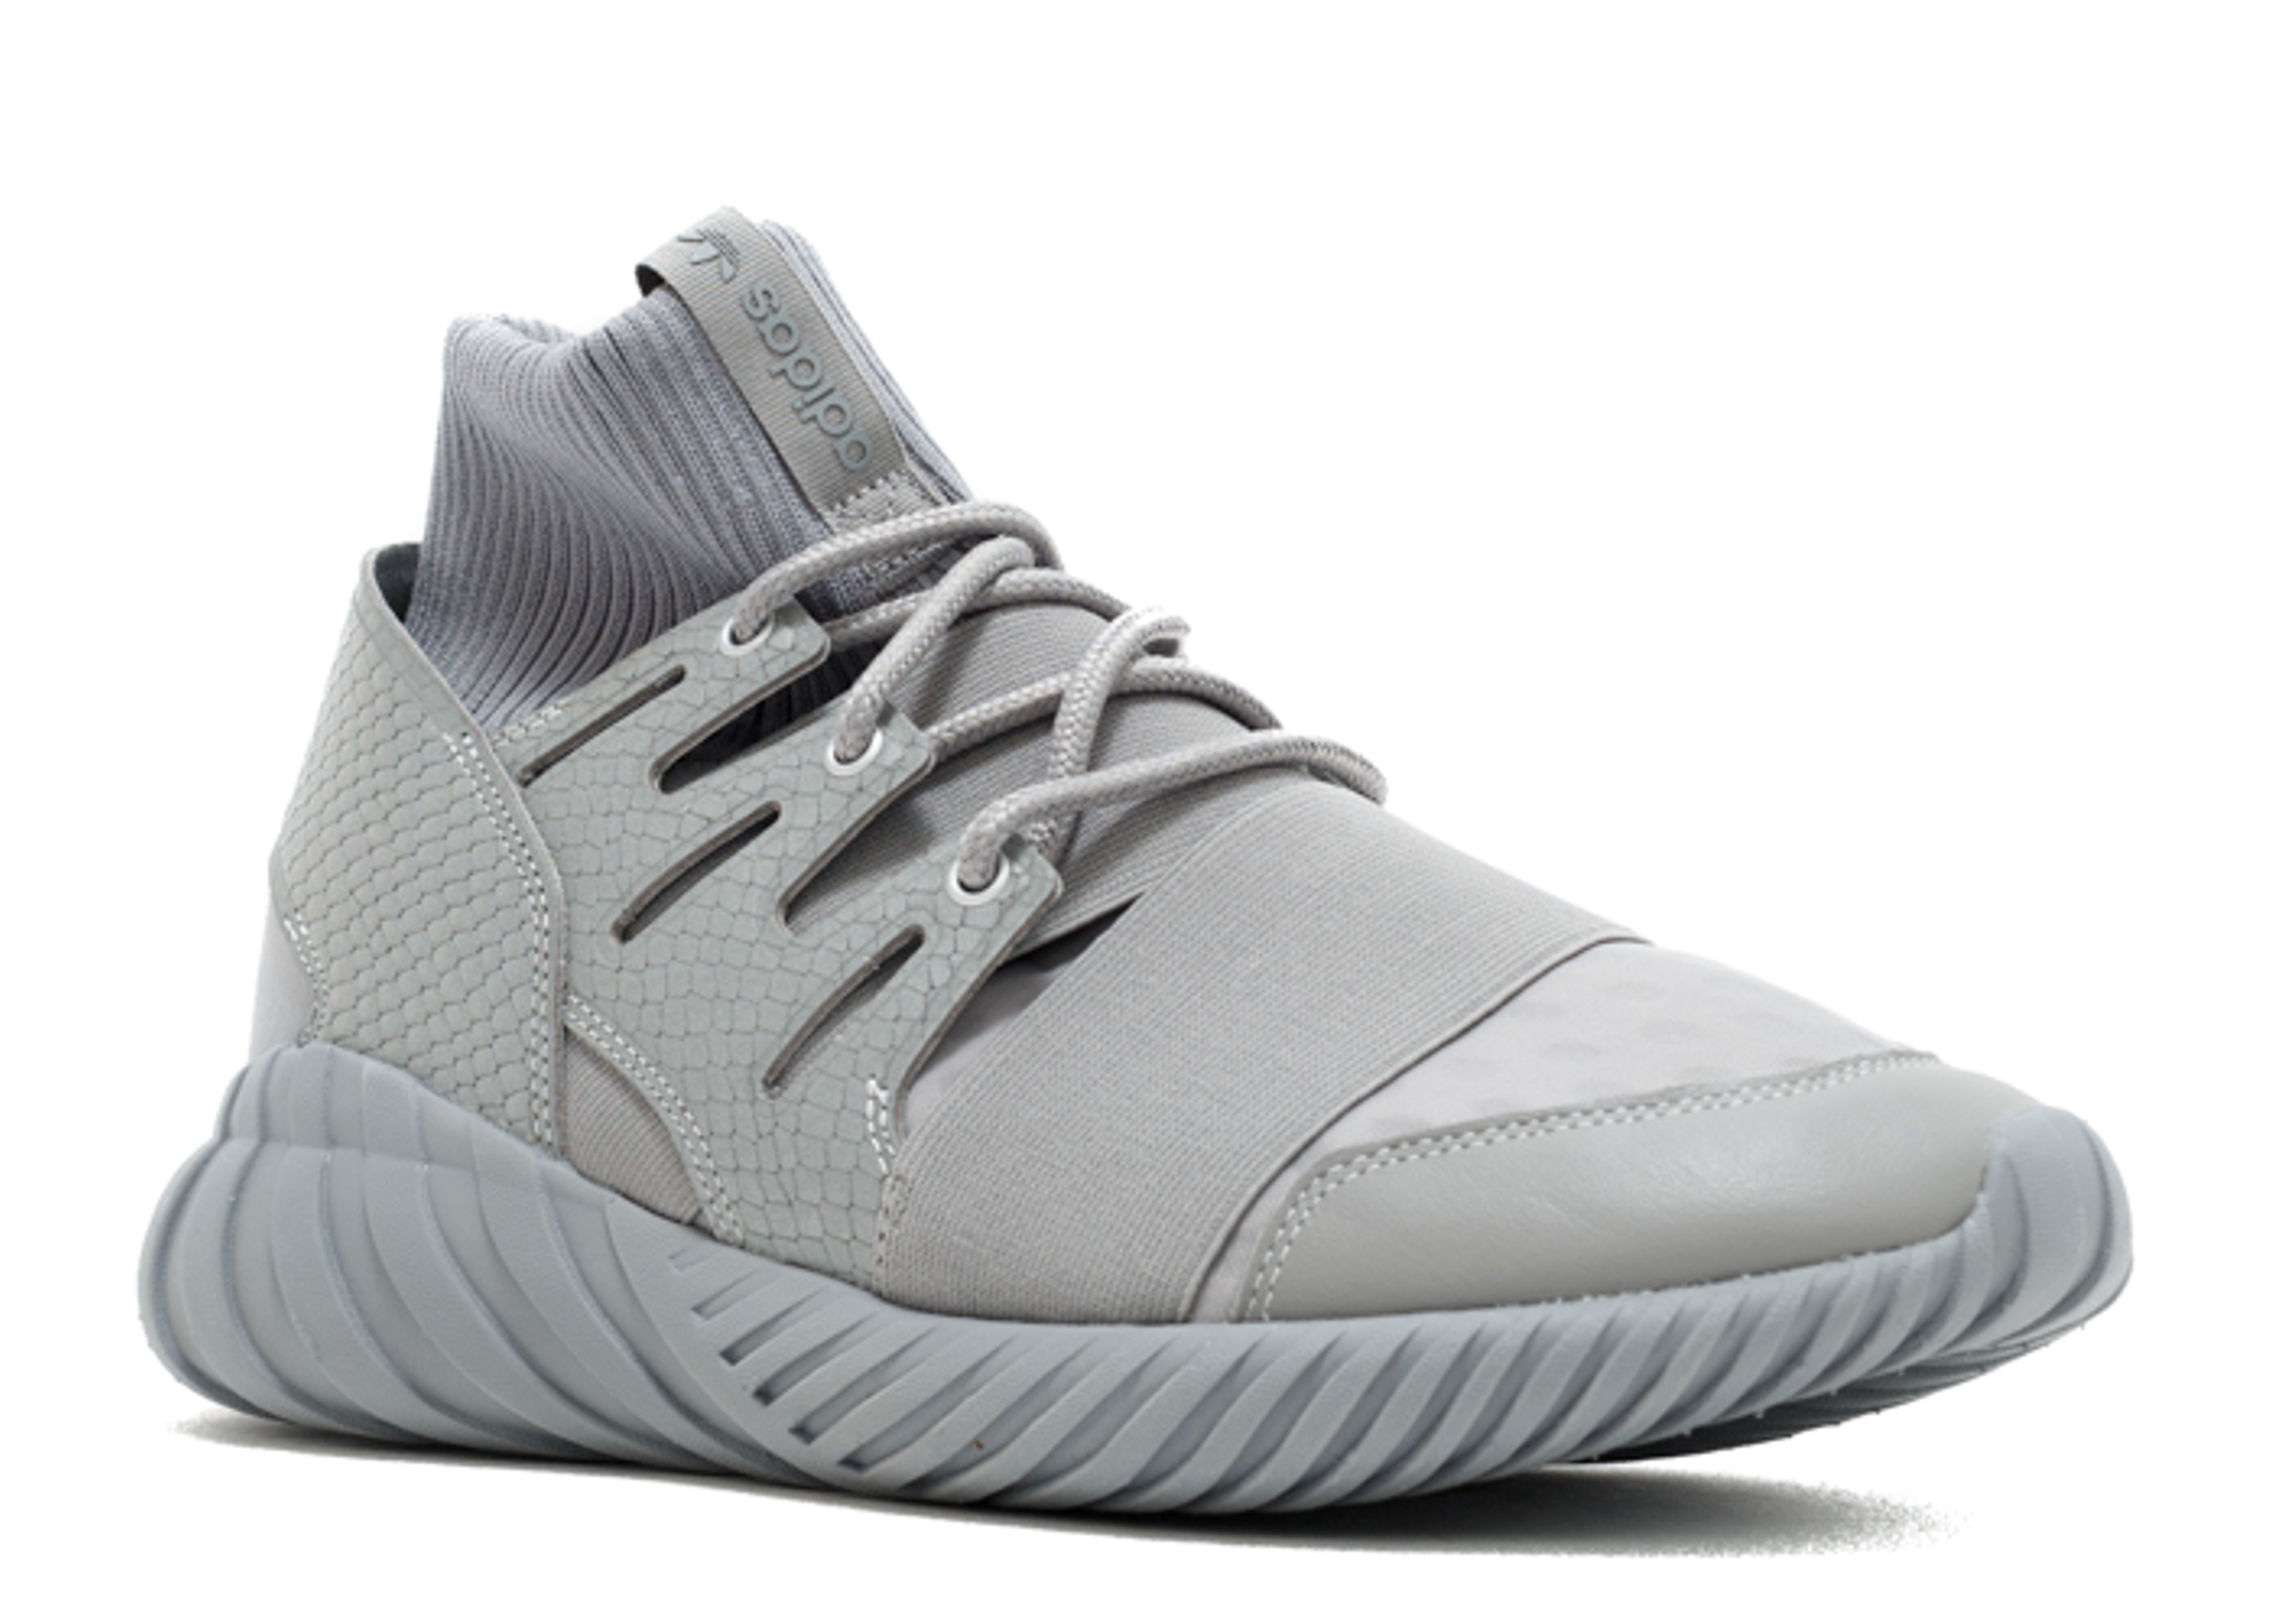 Sneaker Review: Adidas Tubular Radial